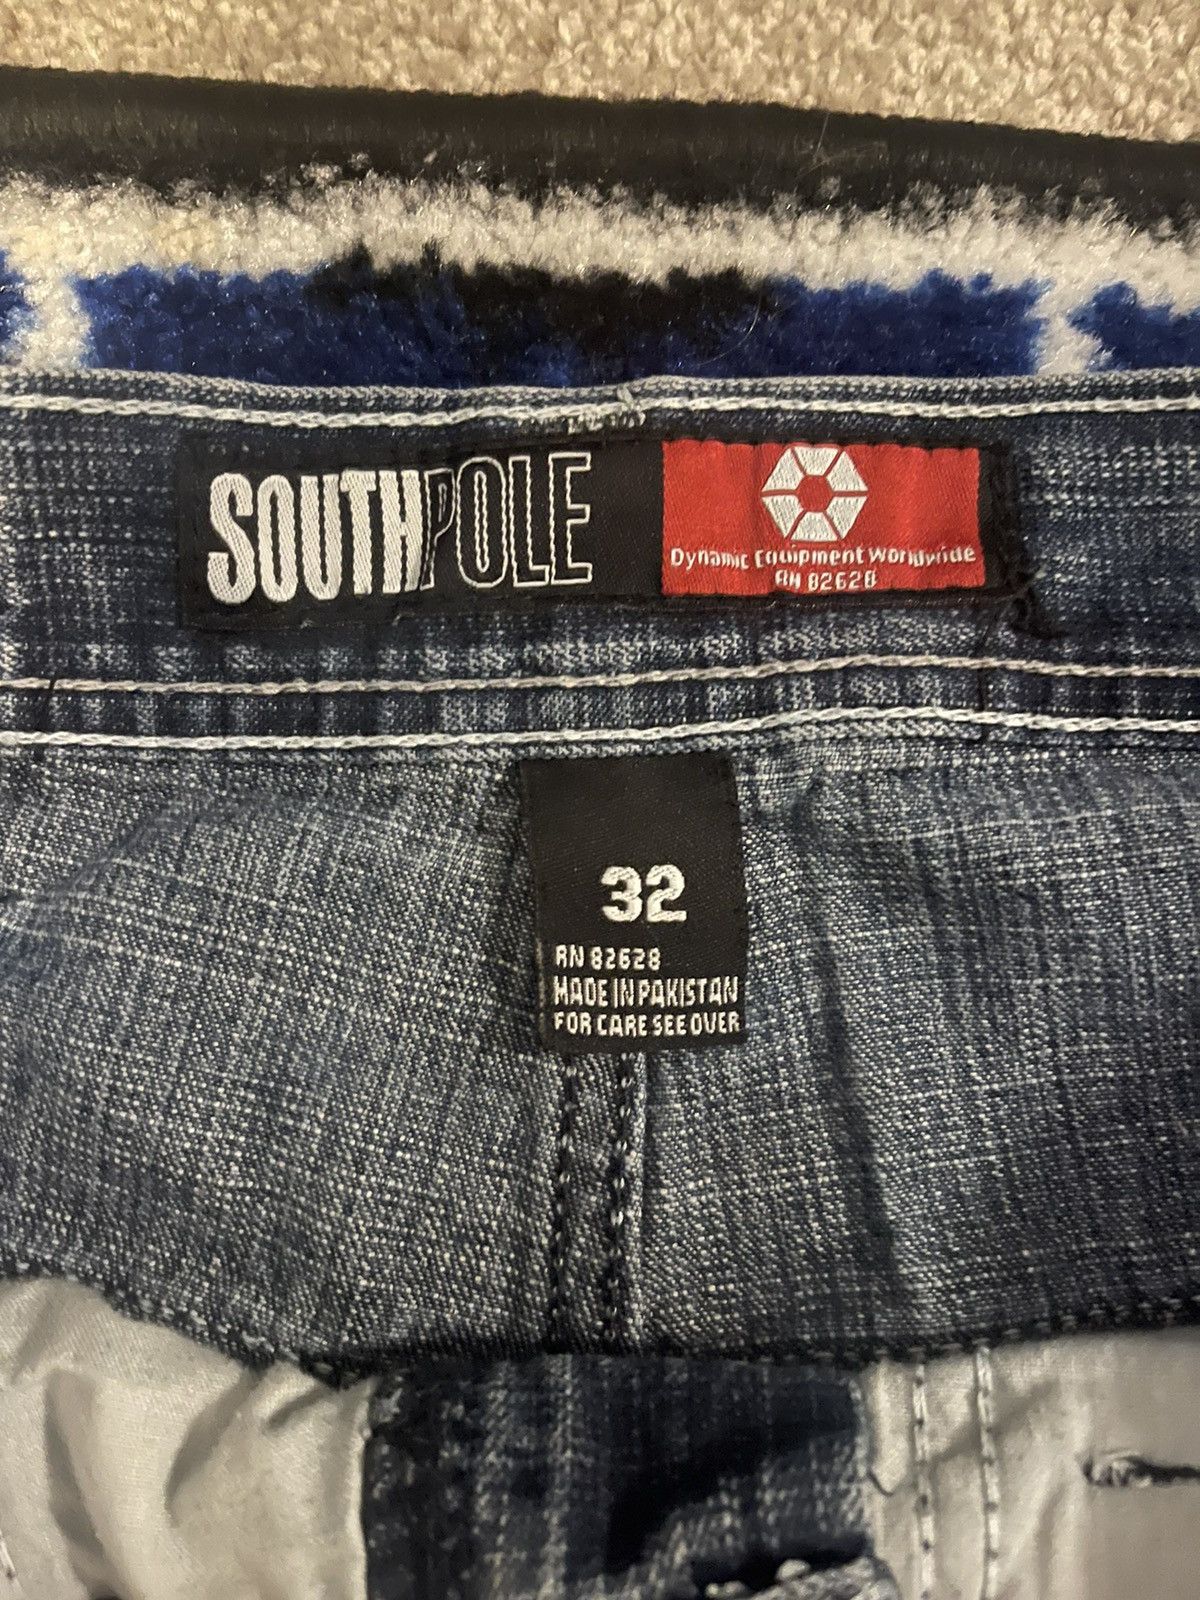 Southpole Southpole Baggy Jeans Size US 32 / EU 48 - 5 Preview